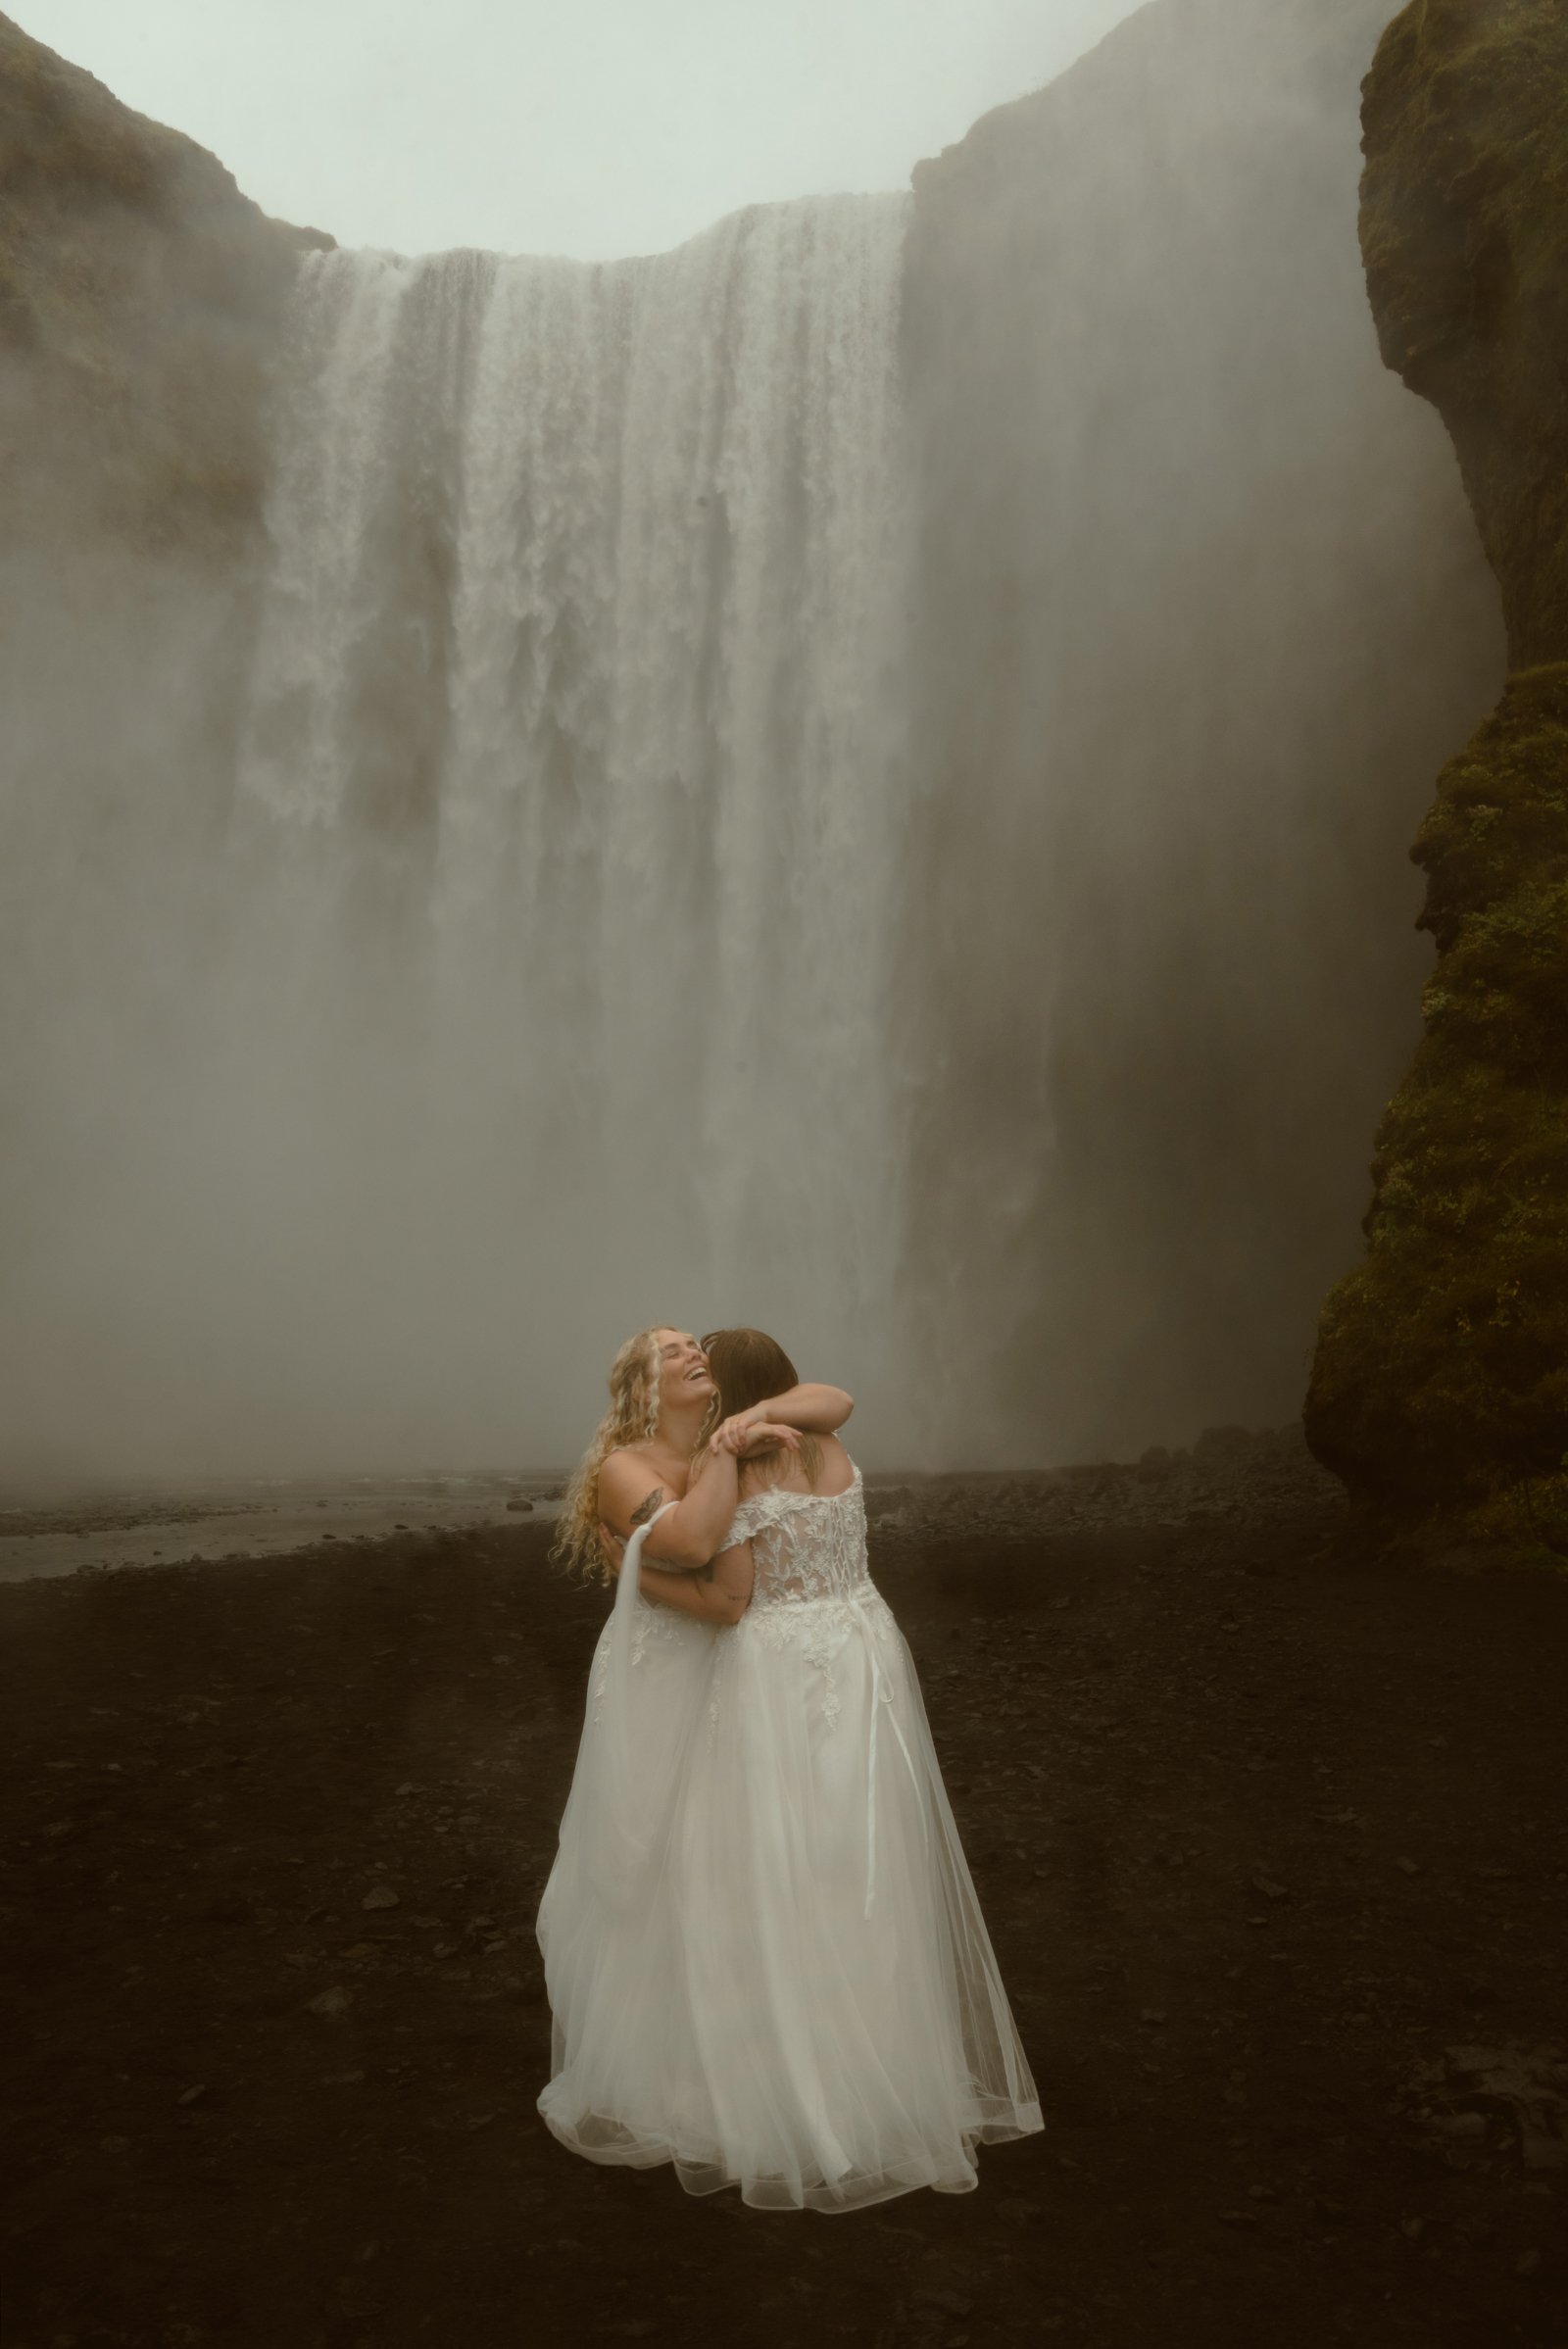 Iceland-Elopement-Photographer-Samantha-Joy-Photo-Destination-Elopement-Photographer (37 of 55) - Copy.jpg